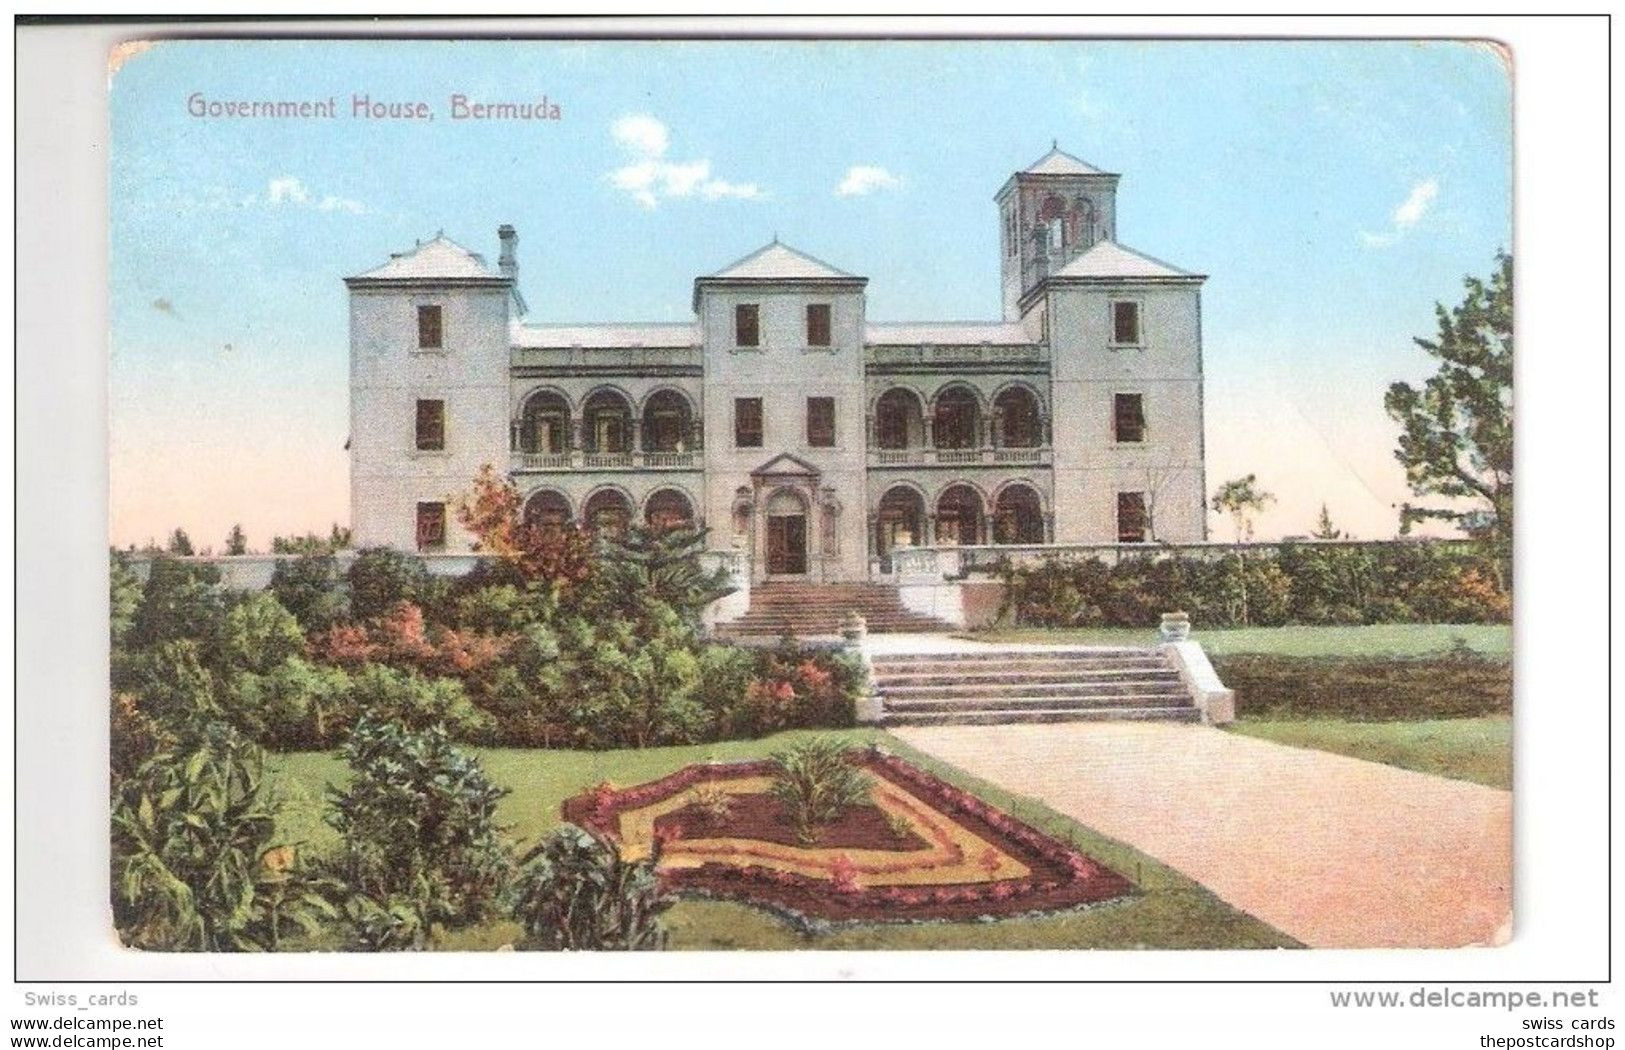 Government House, Bermuda, No. 39, By Wm. Weiss & Co., Circa 1910, Vintage Postcard - Bermuda